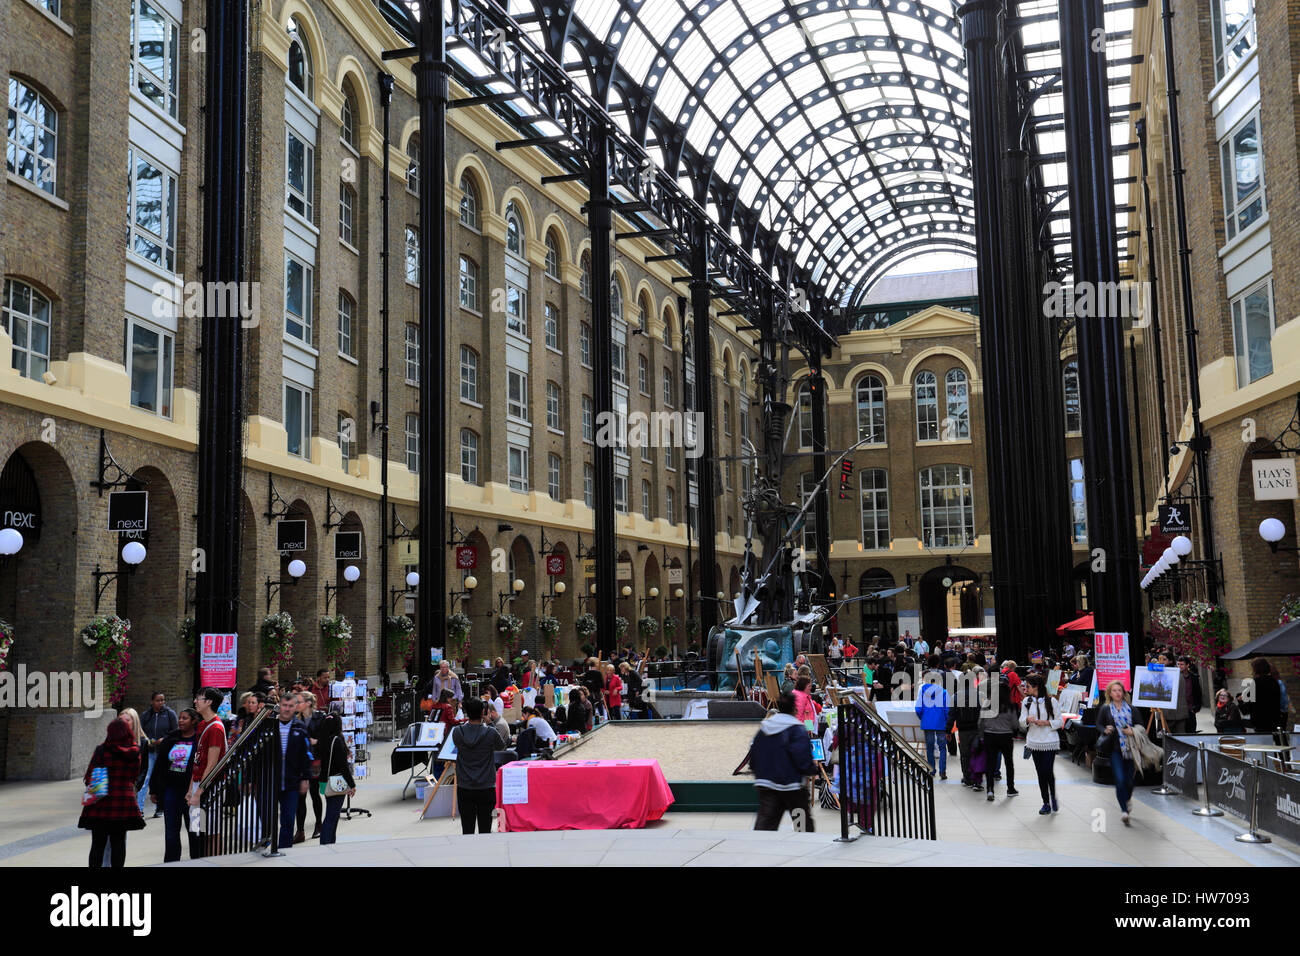 Interior of Hays Galleria, South Bank, London Borough of Southwark, Greater London, England, United Kingdom Stock Photo